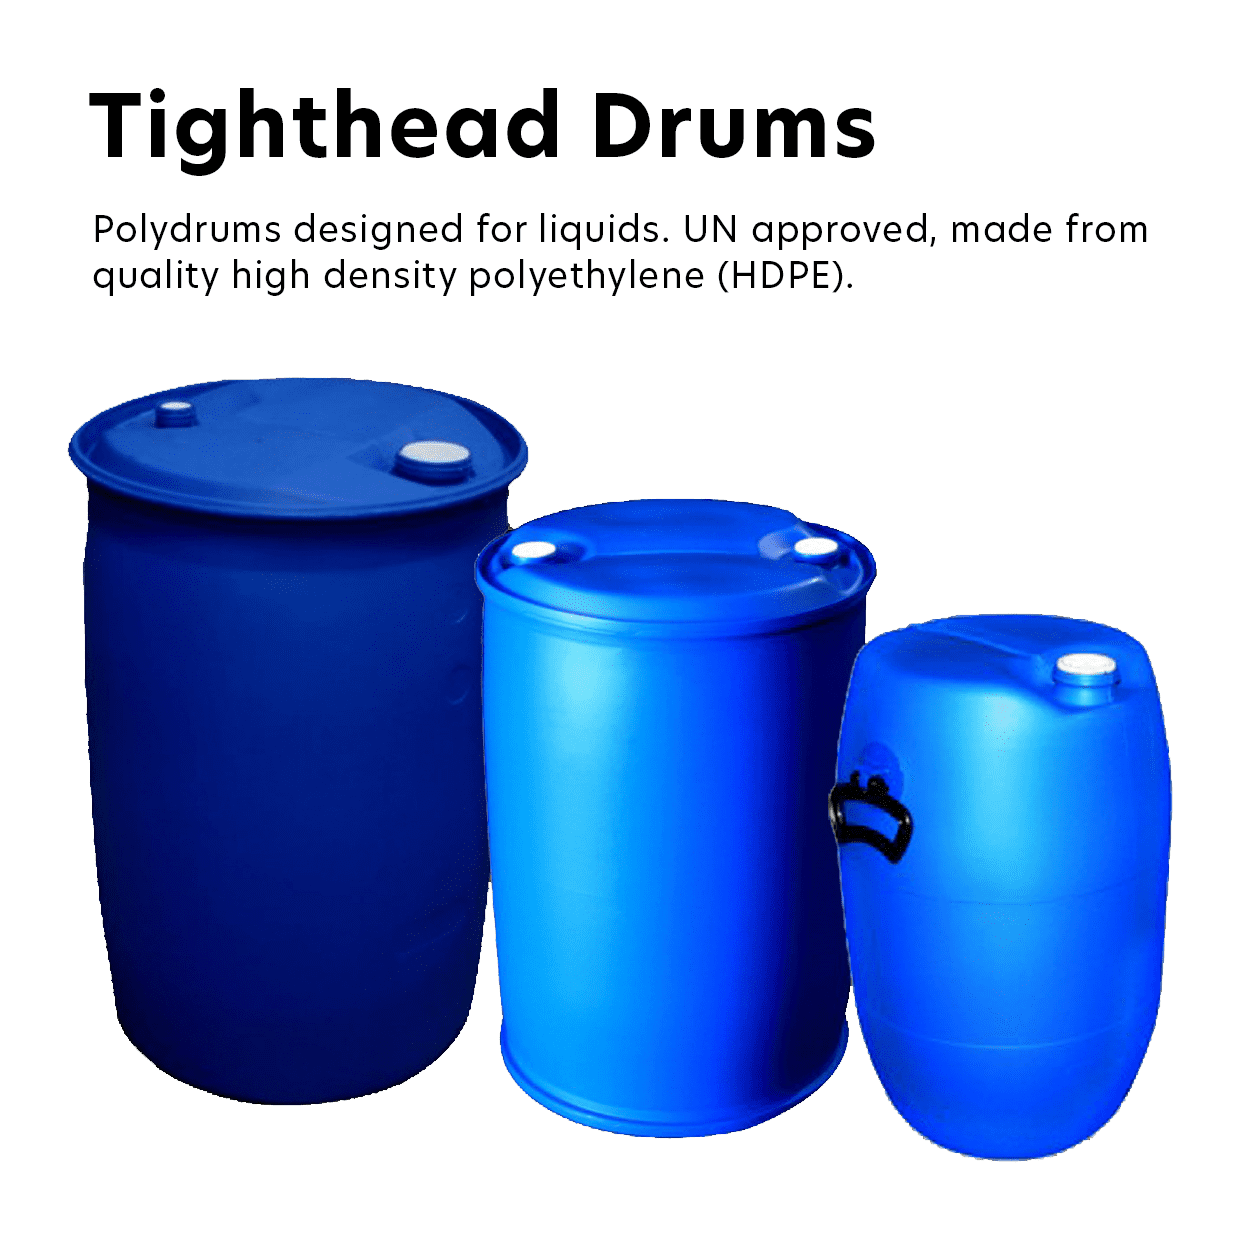 Tighthead Drums